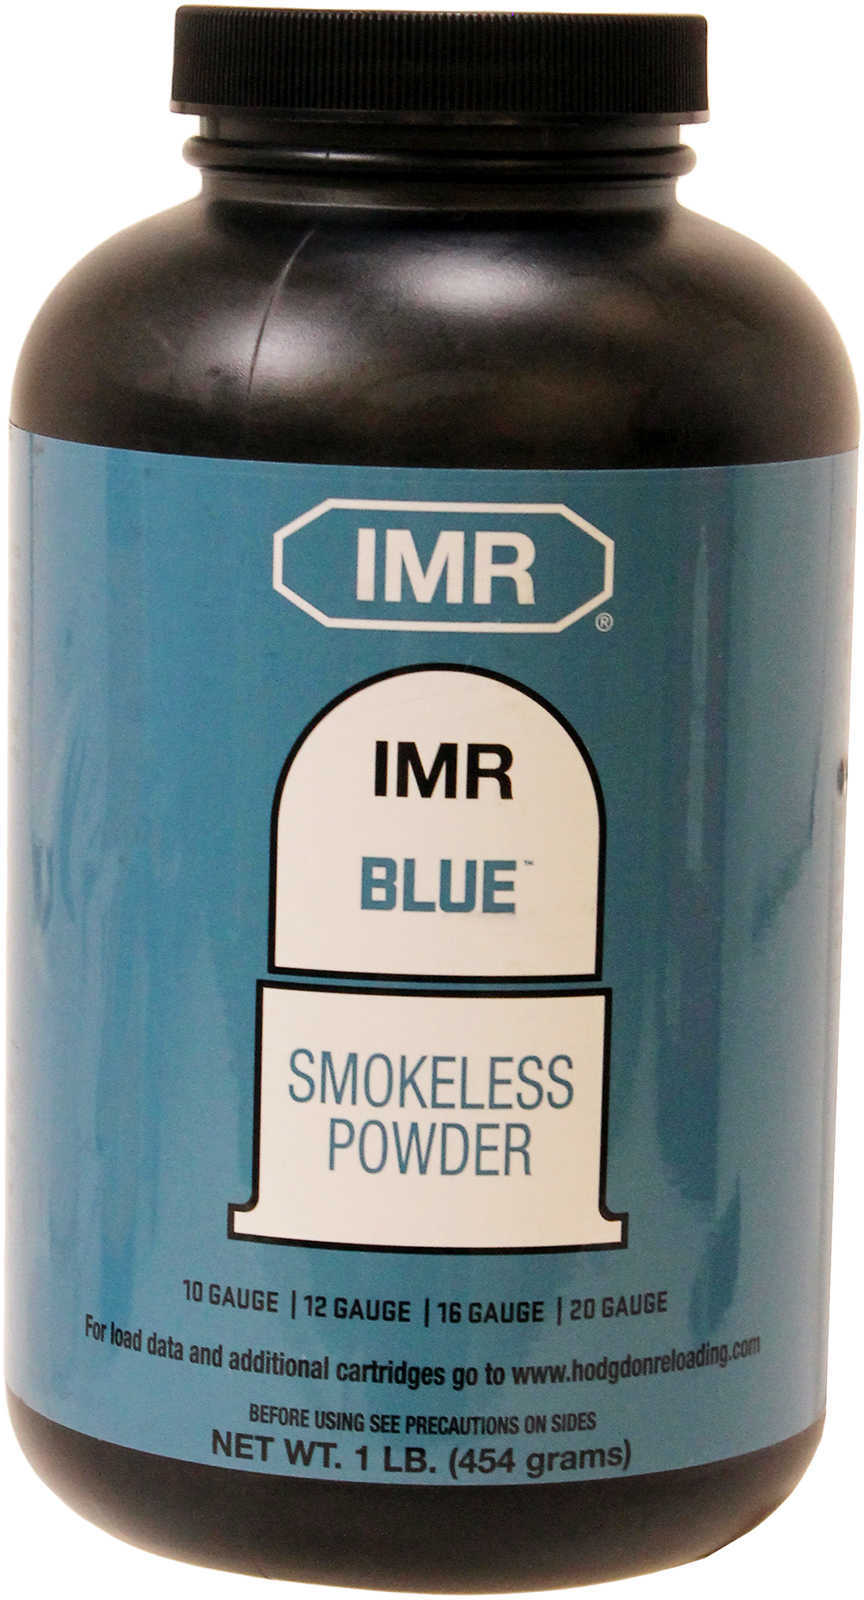 Hodgdon IMR Blue Smokeless Powder 1 Lb